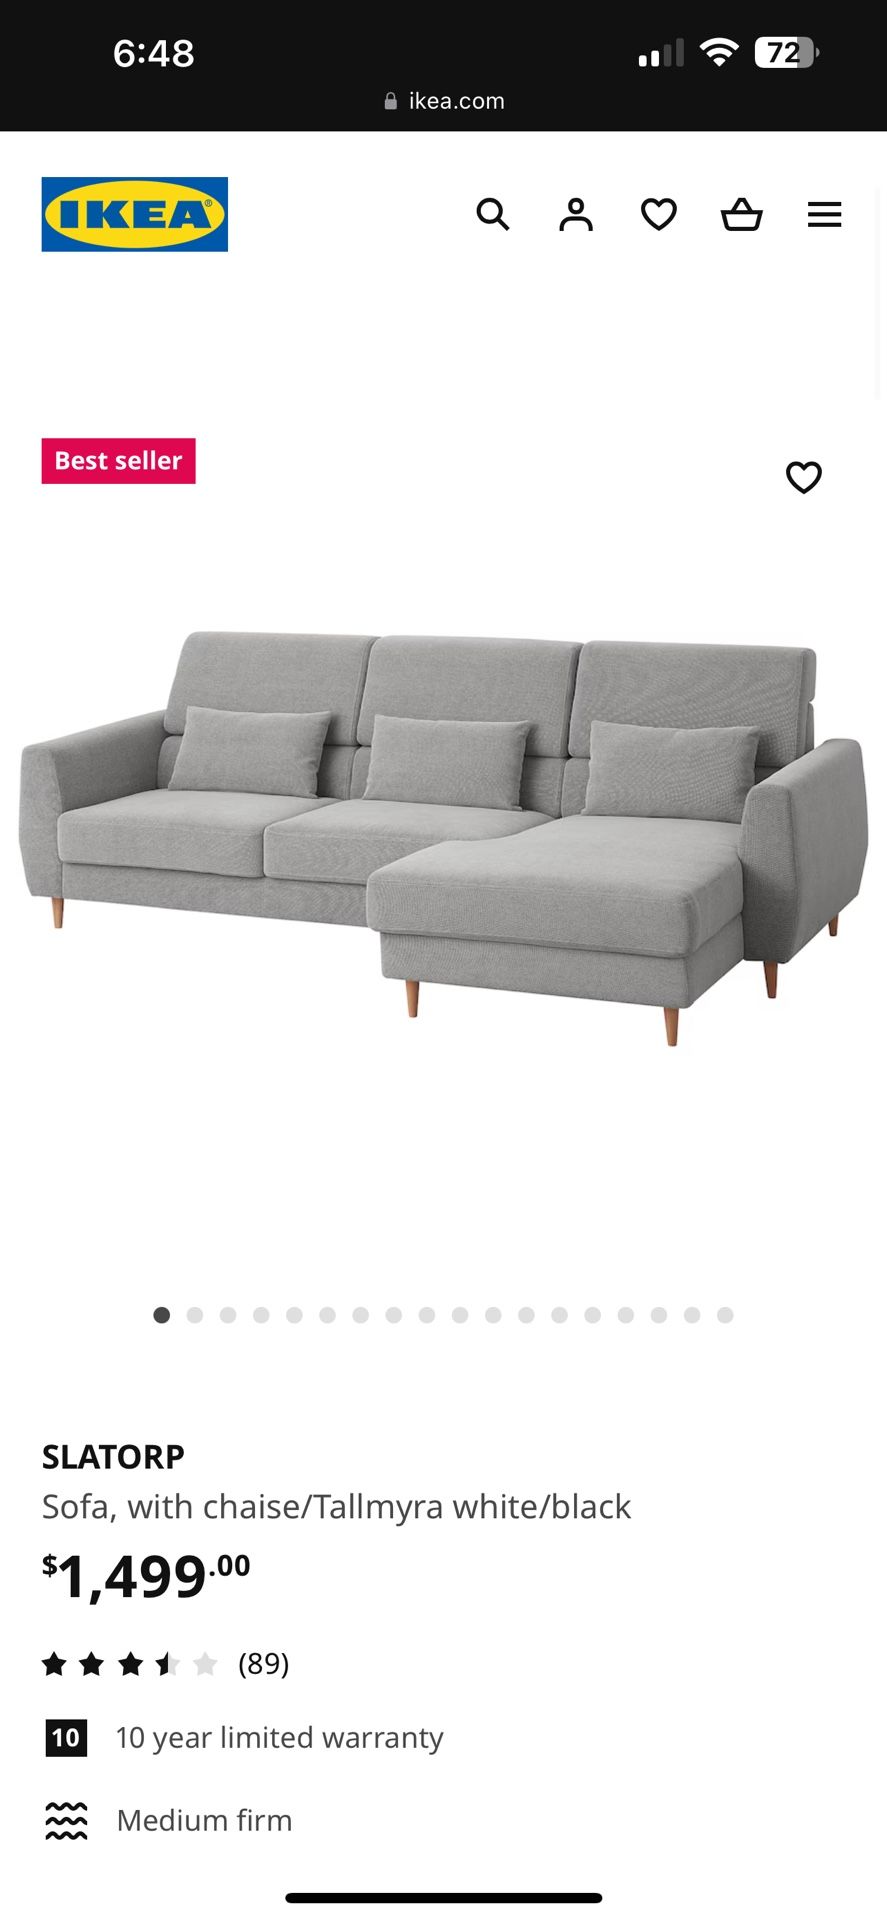 IKEA Slatorp Sofa Sectional With Chaise 